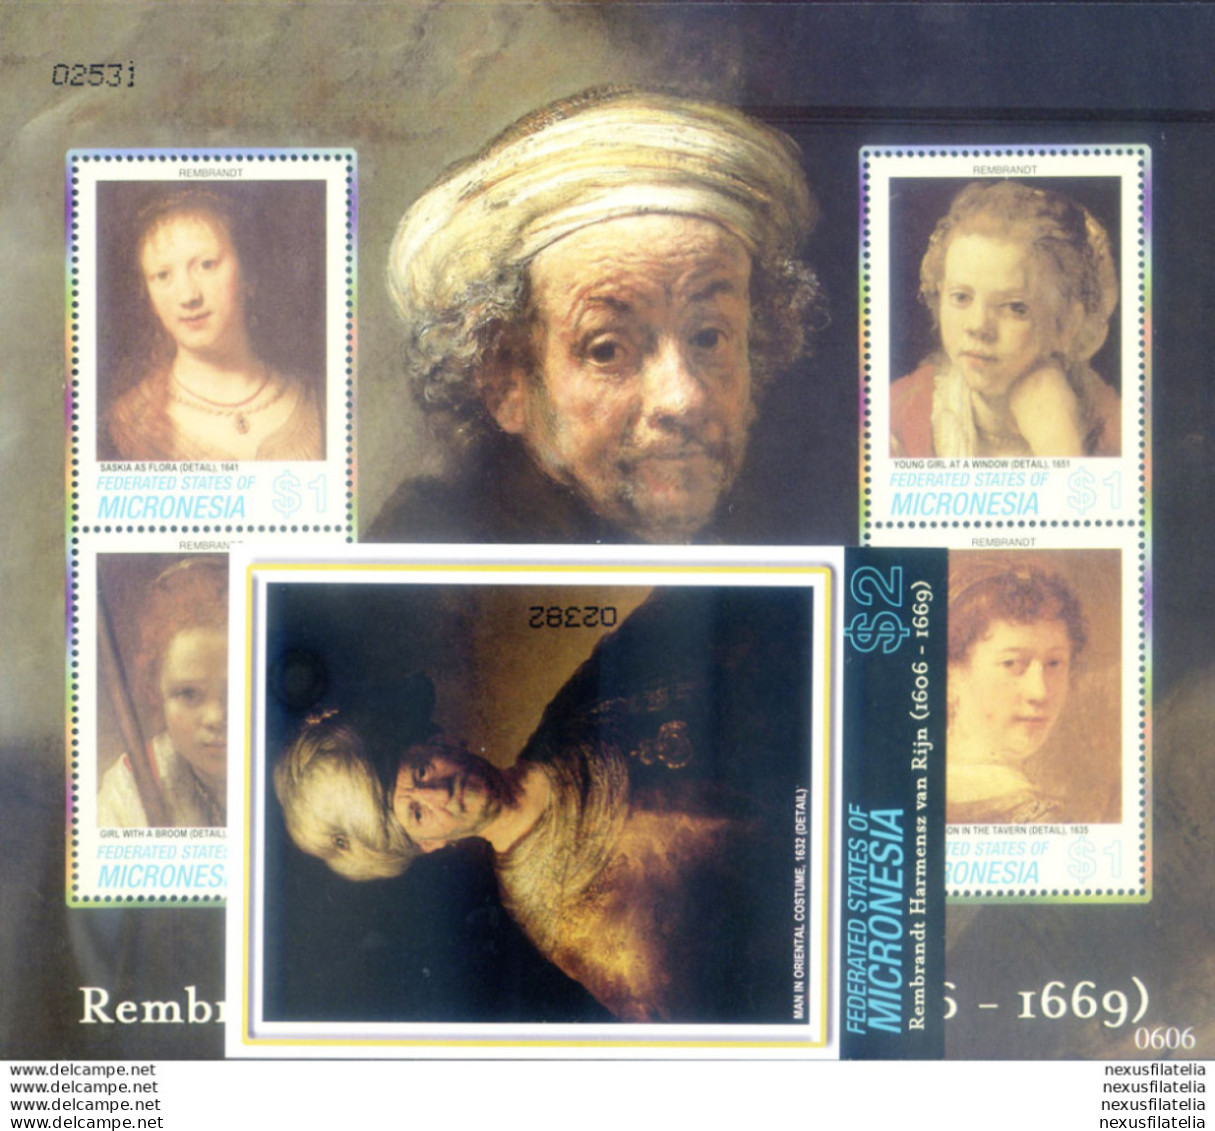 Rembrandt 2006. - Micronésie